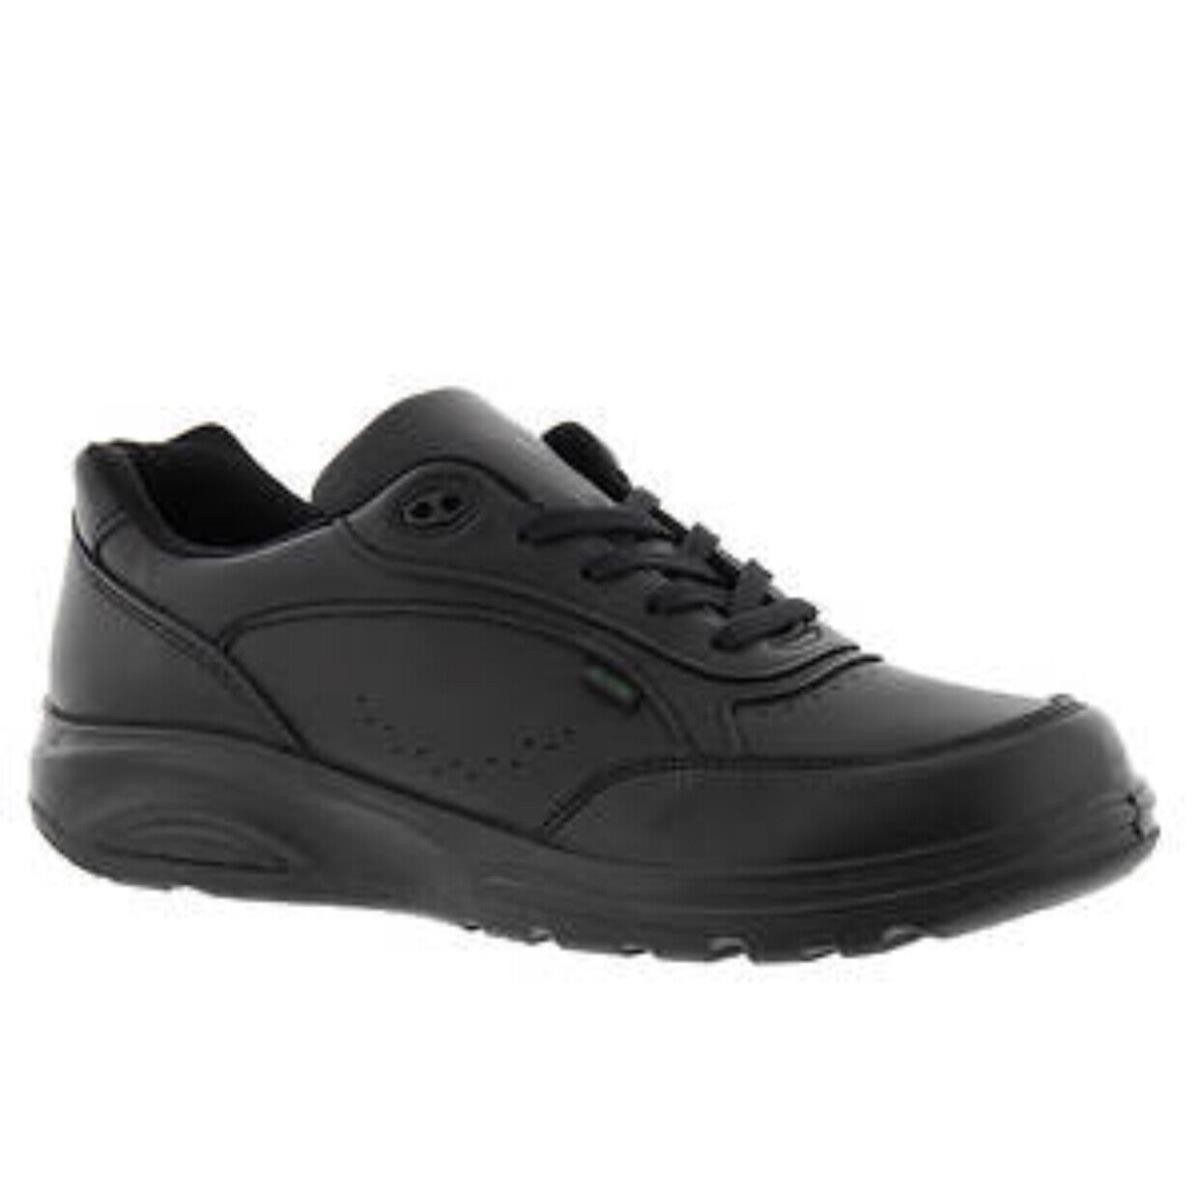 Balance Postal 706V2 Walking Shoes MK706NK2 Size 7.5